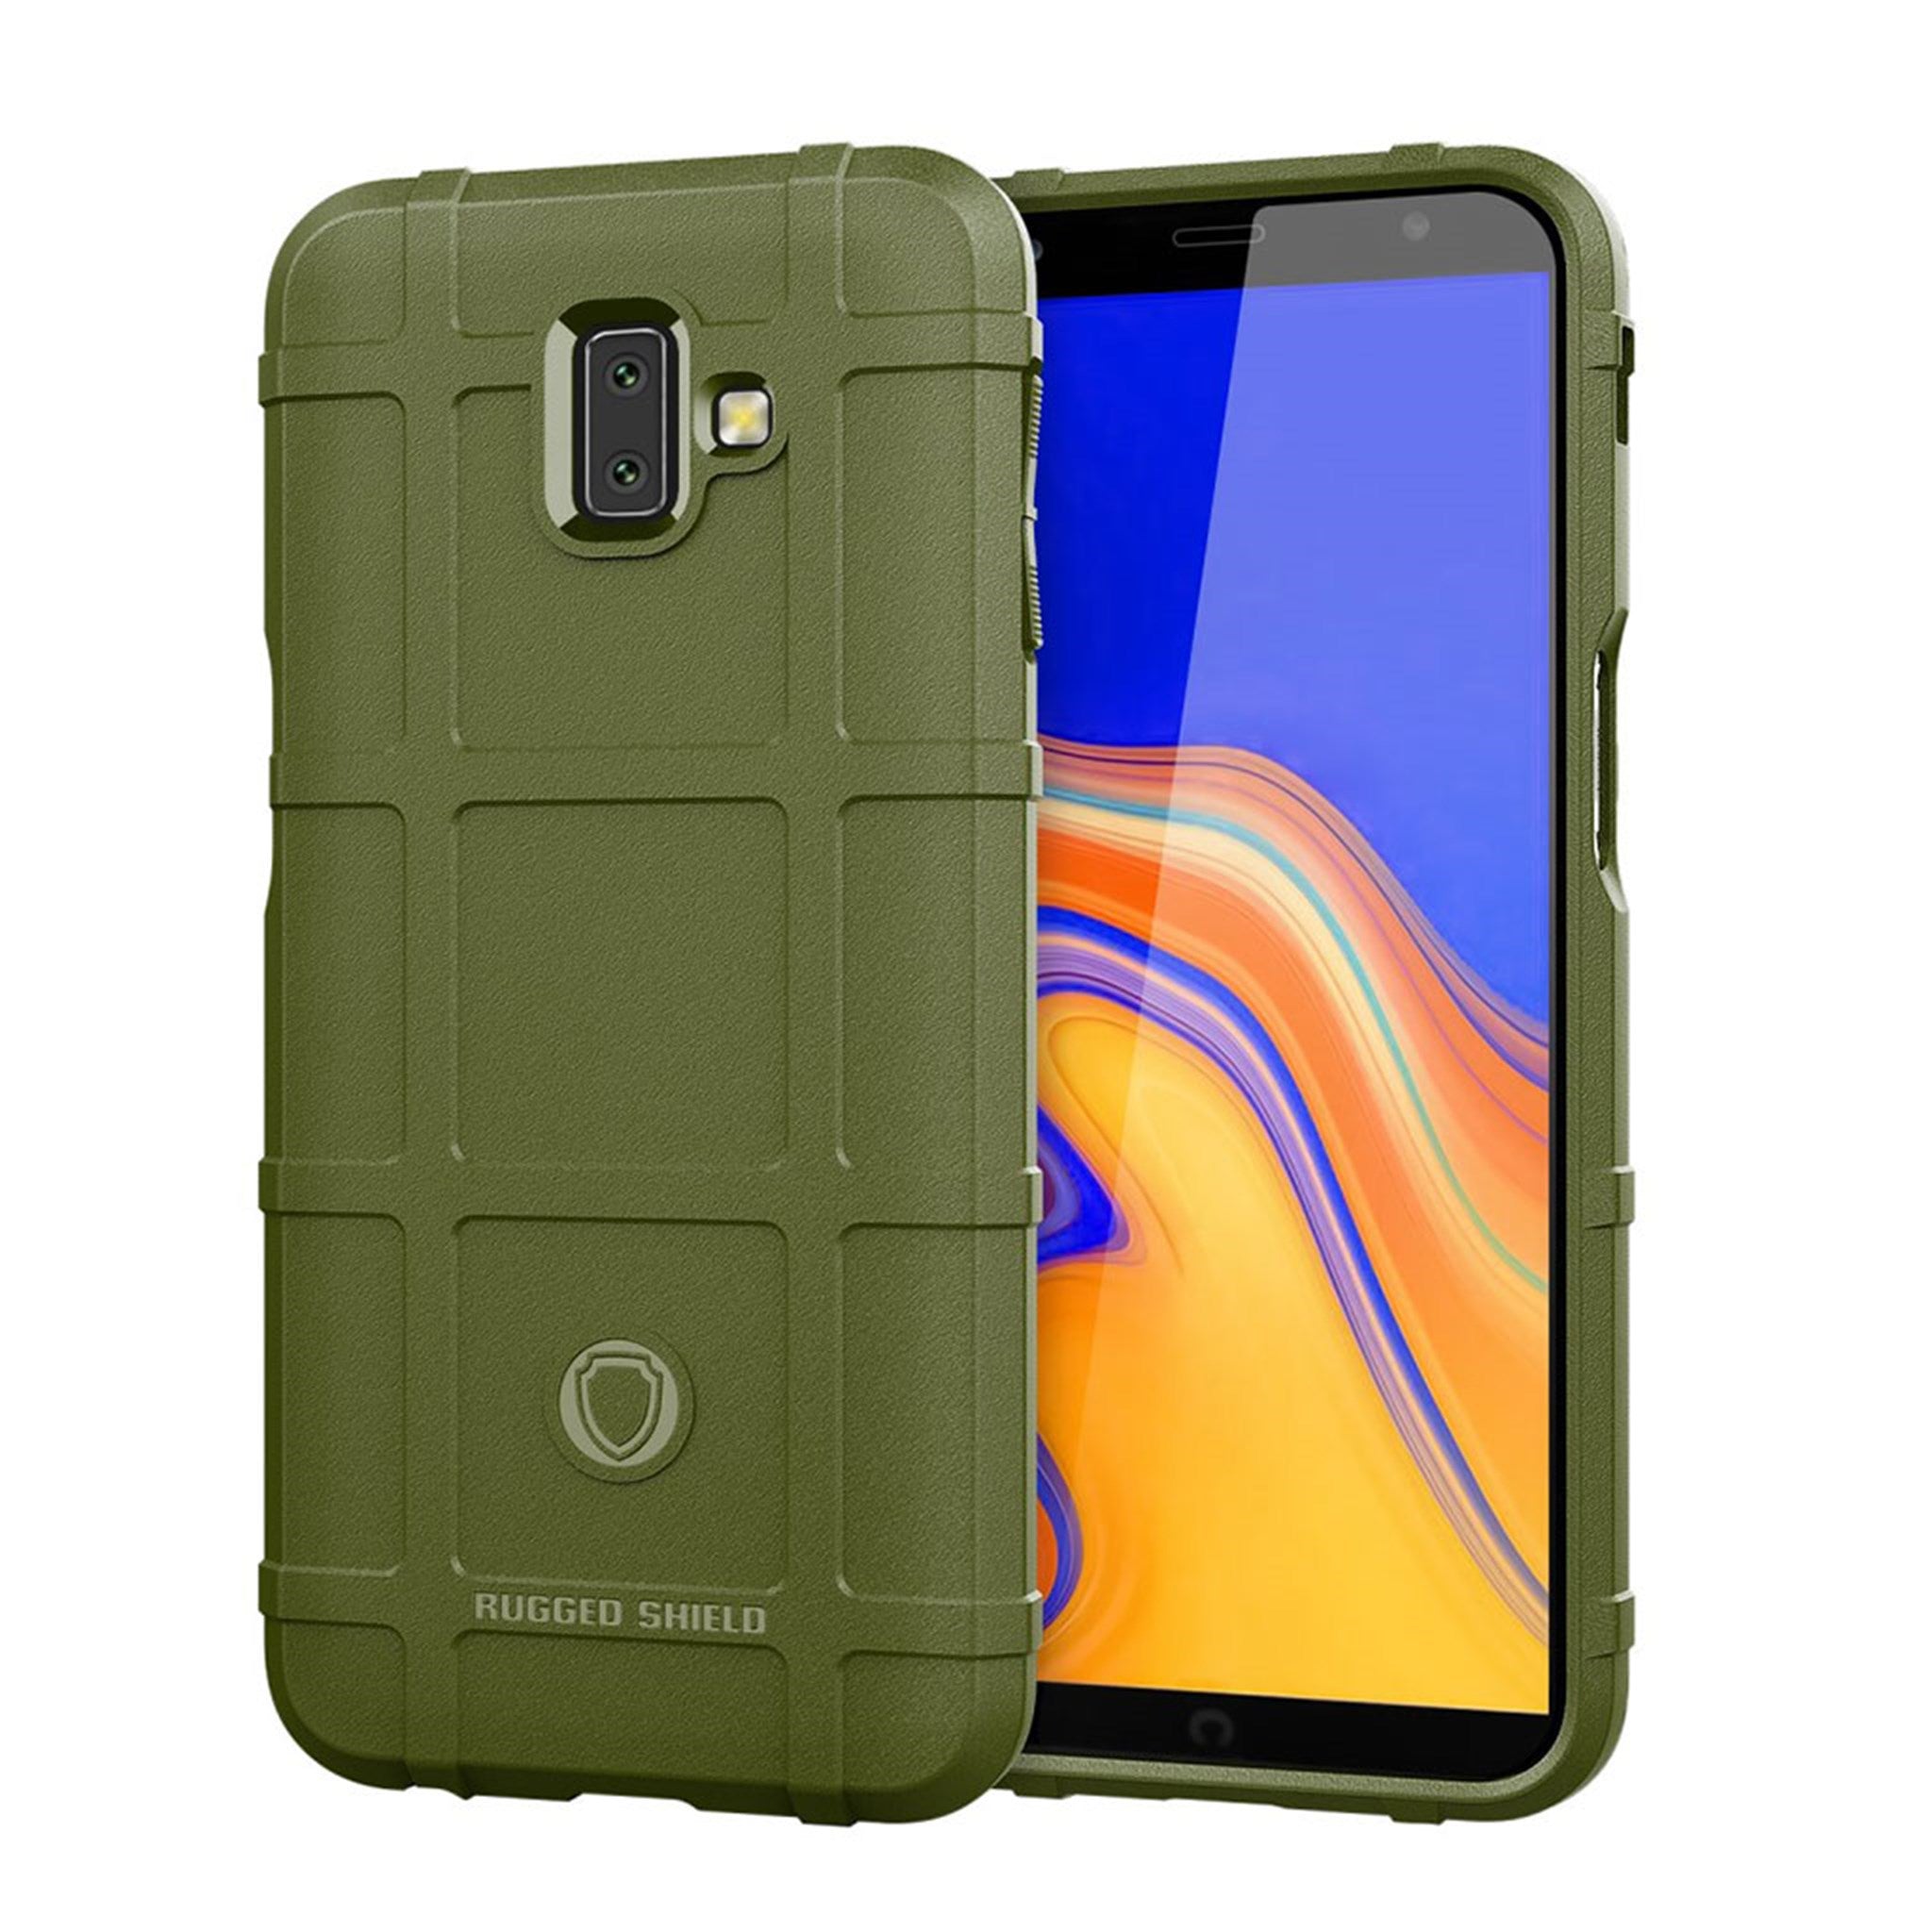 Samsung Galaxy J6 Plus (2018) anti-shock grid texture soft case - Green